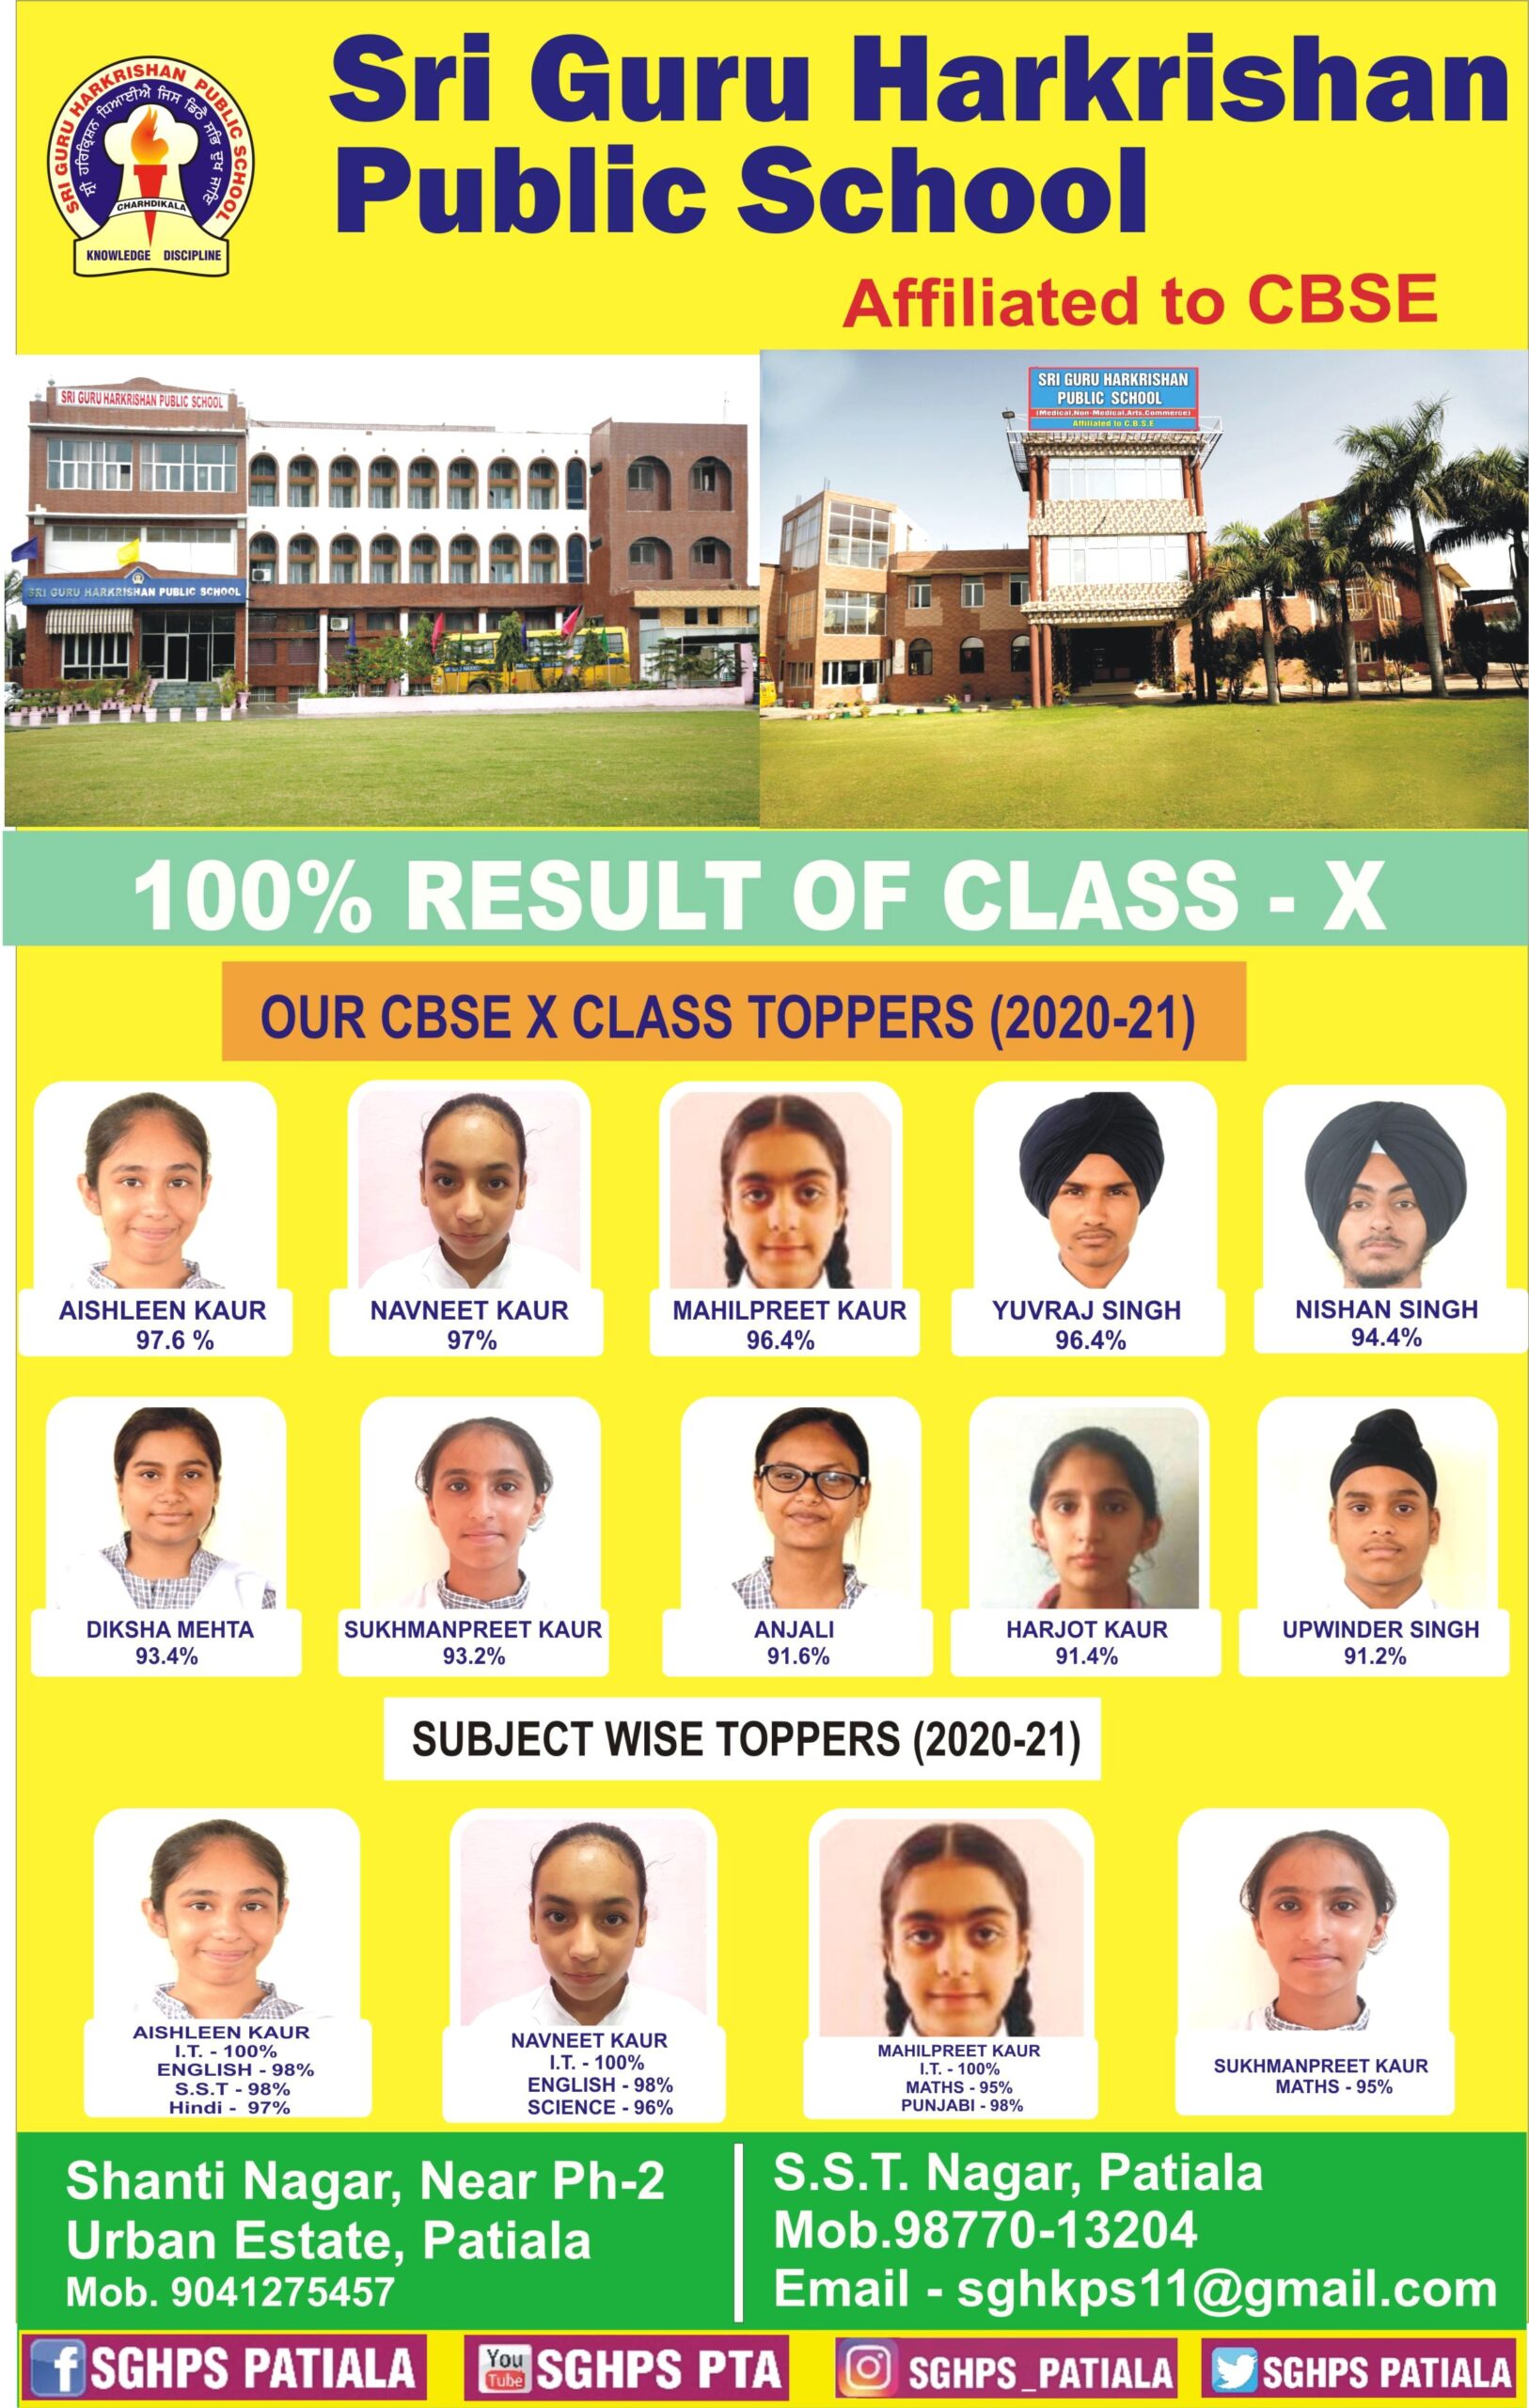 Sri Guru Harkrishan Public School achieved outstanding class 10th result